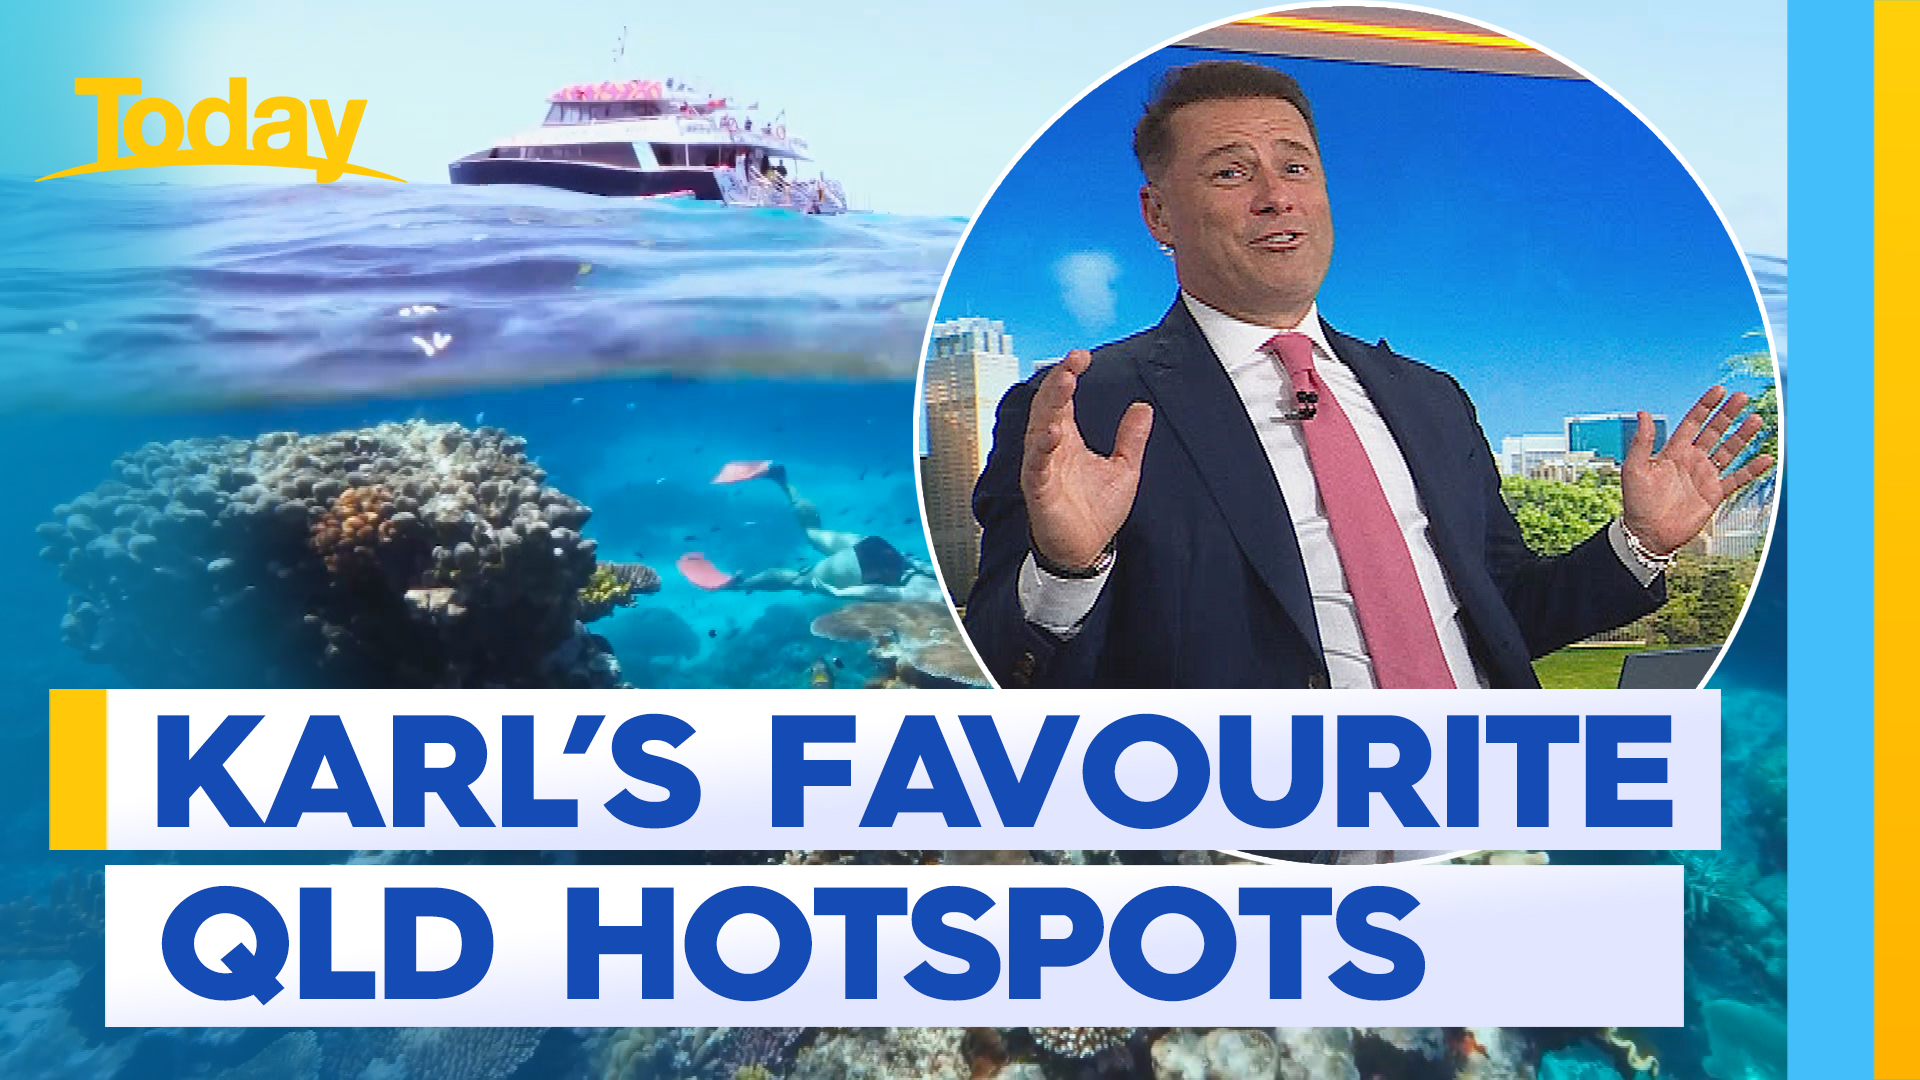 Karl reveals some of his favourite Queensland hotspots